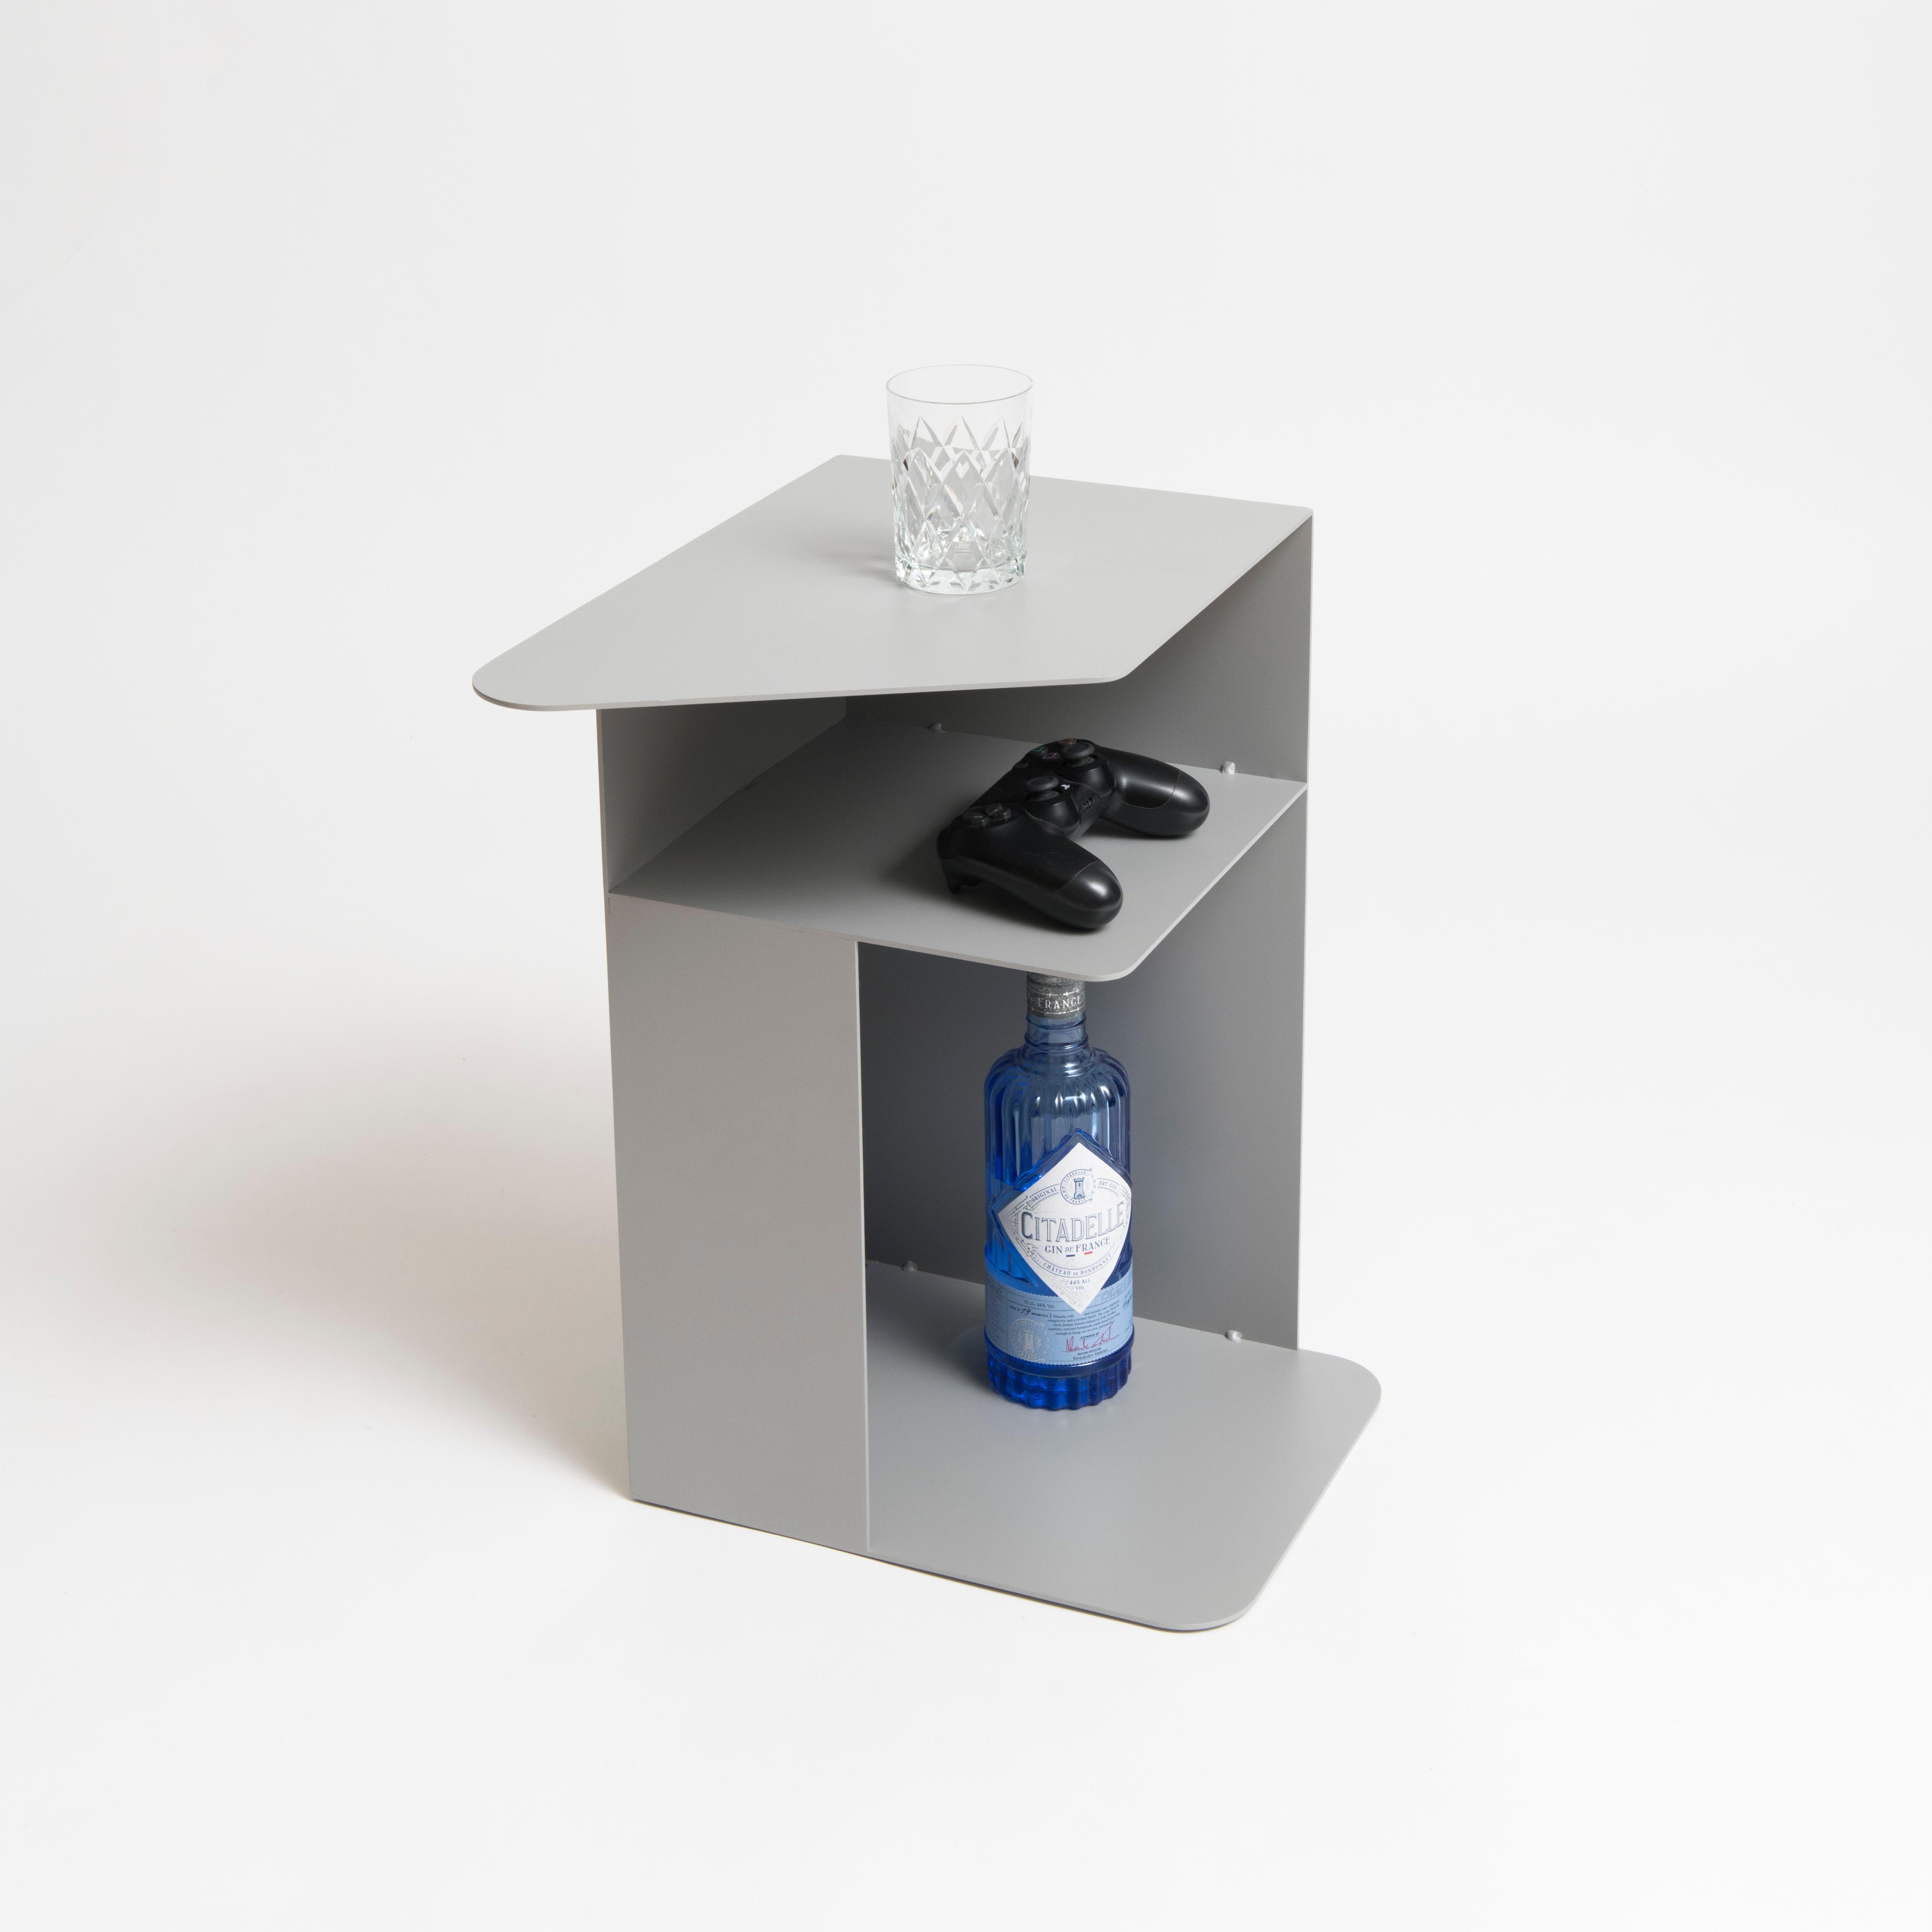 Polish Grey aluminium Side Table, minimalist modern design - om26 by mjiila - in stock For Sale